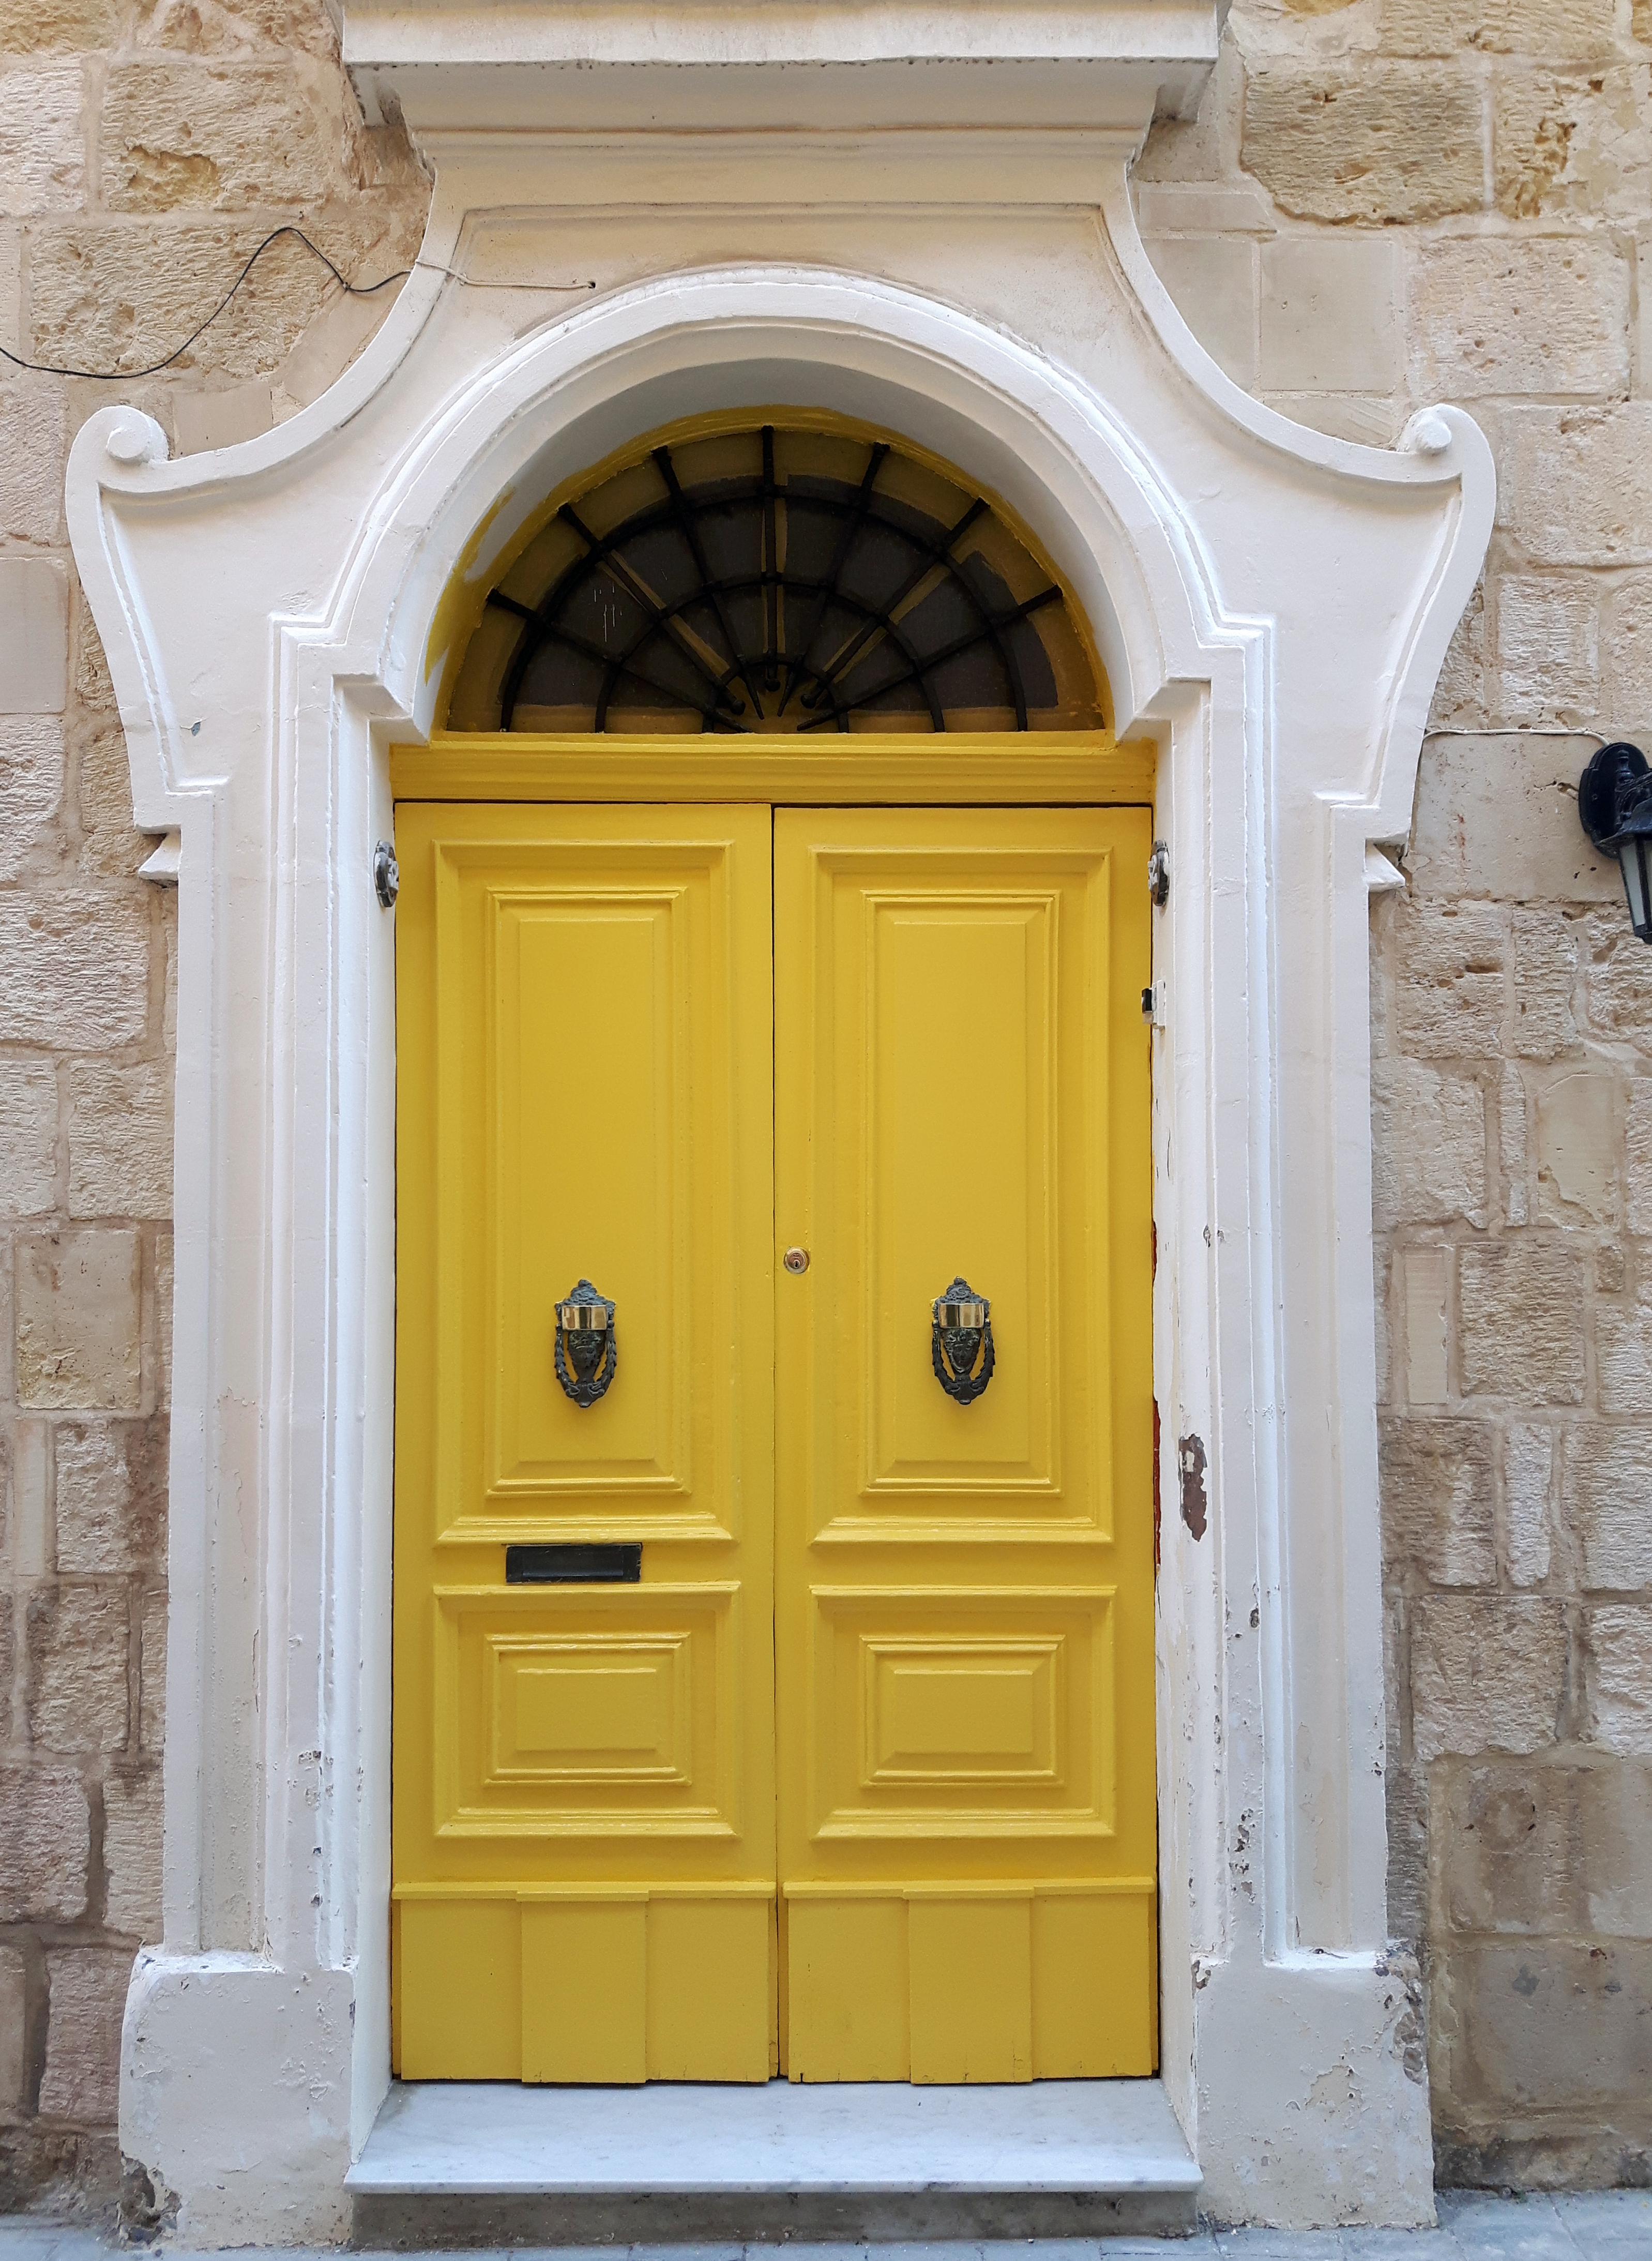 Colourful_Doors_Malta_Europe